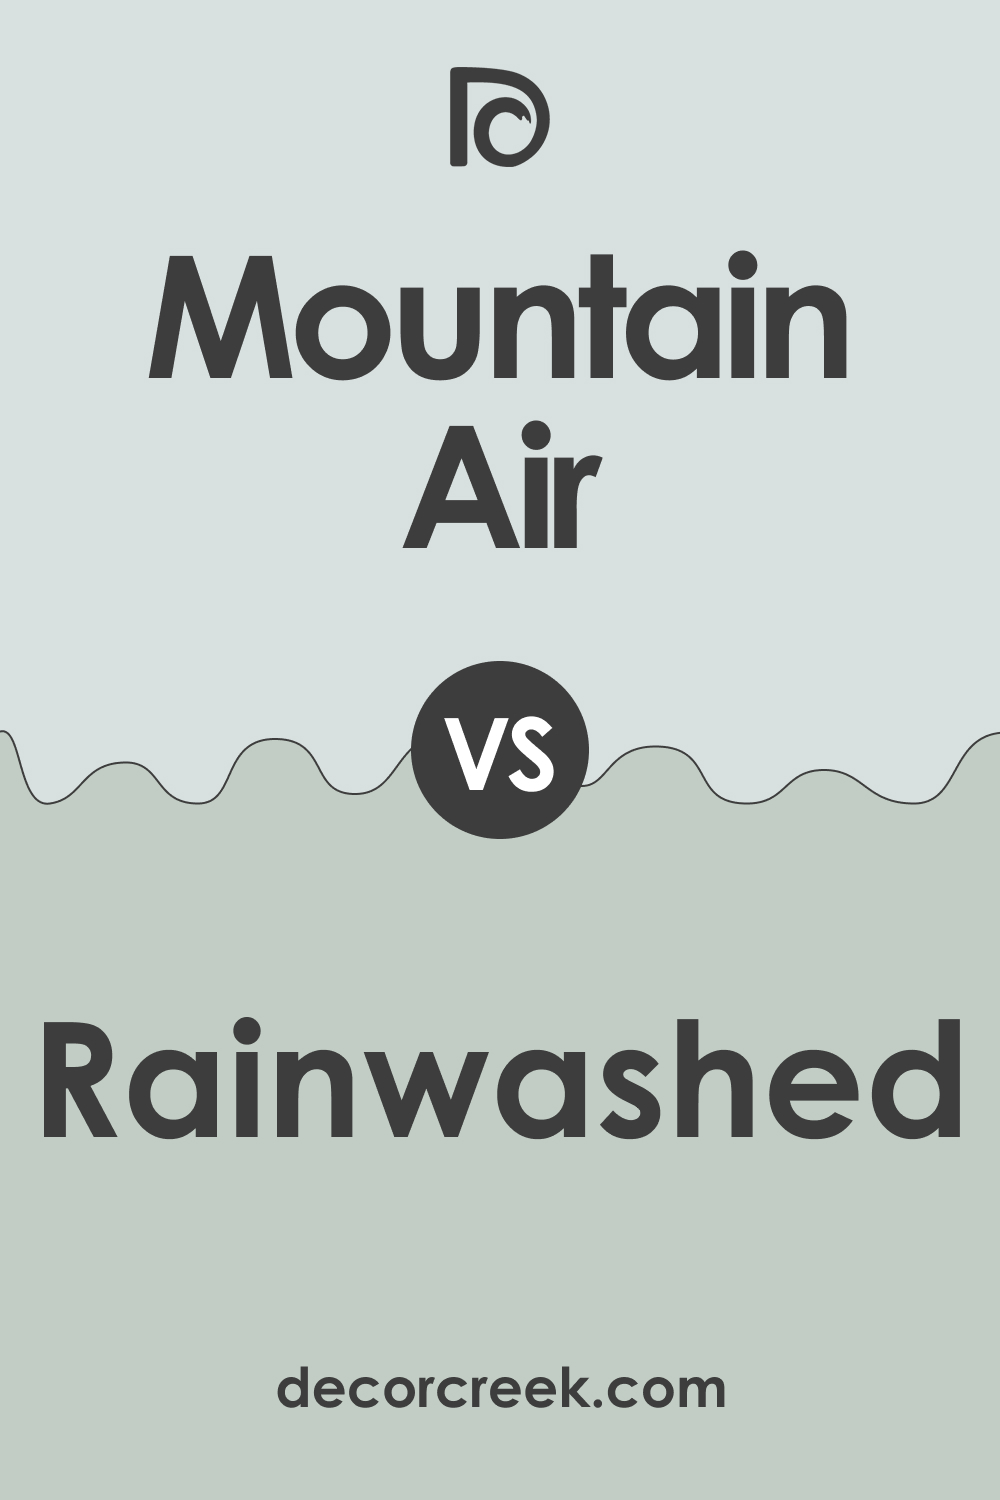 Mountain Air SW-6224 vs. Rainwashed SW-6211